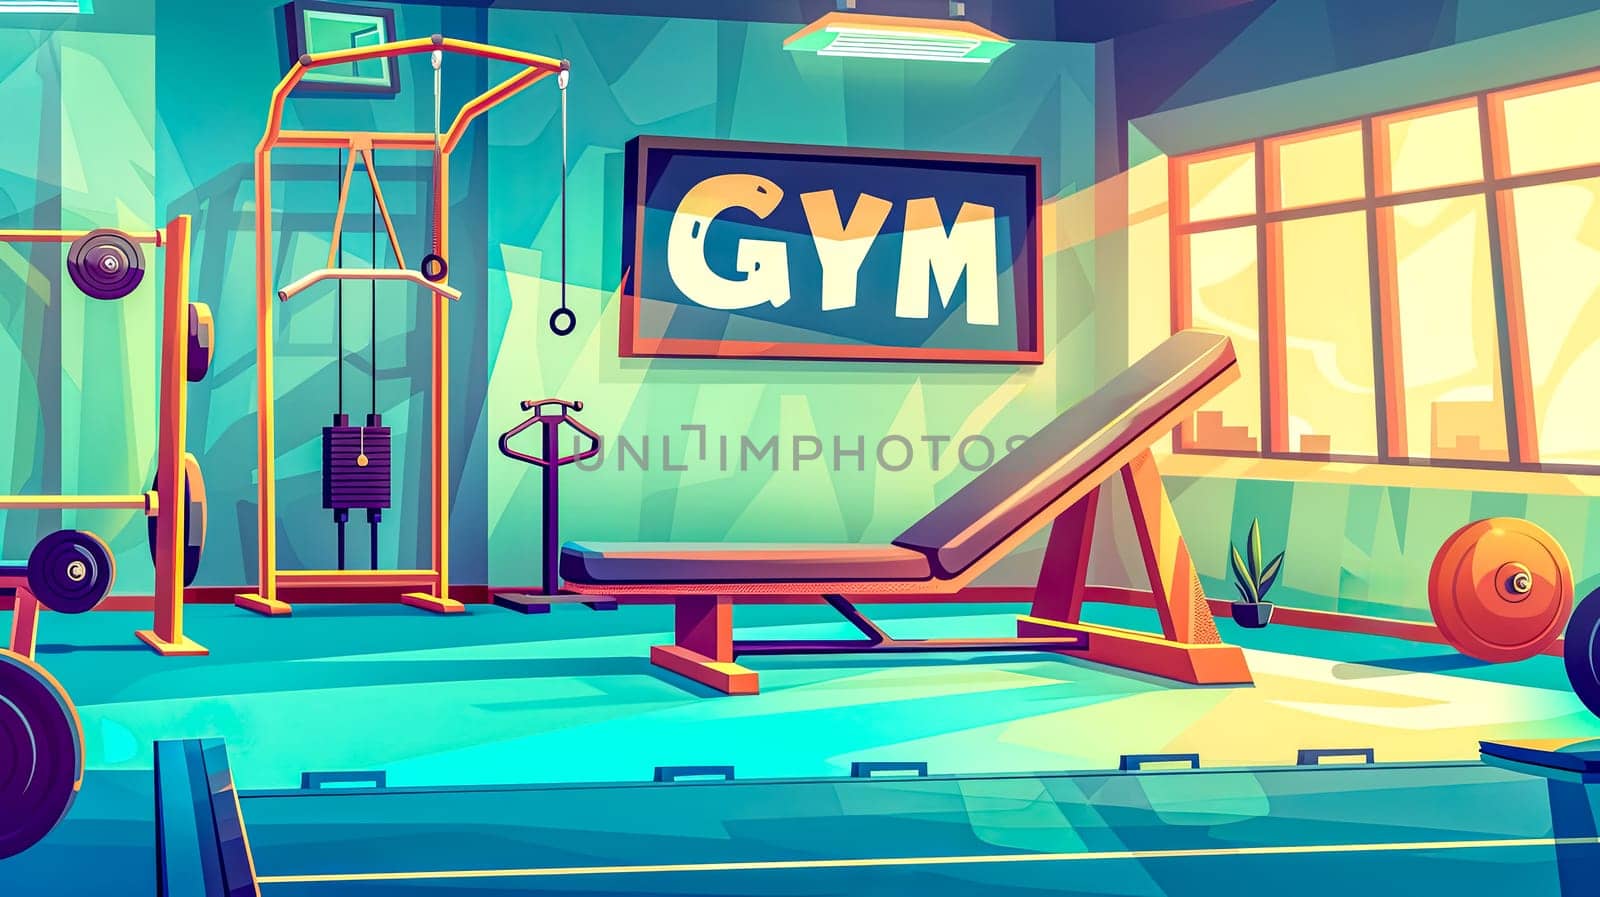 Modern digital gym interior illustration by Edophoto